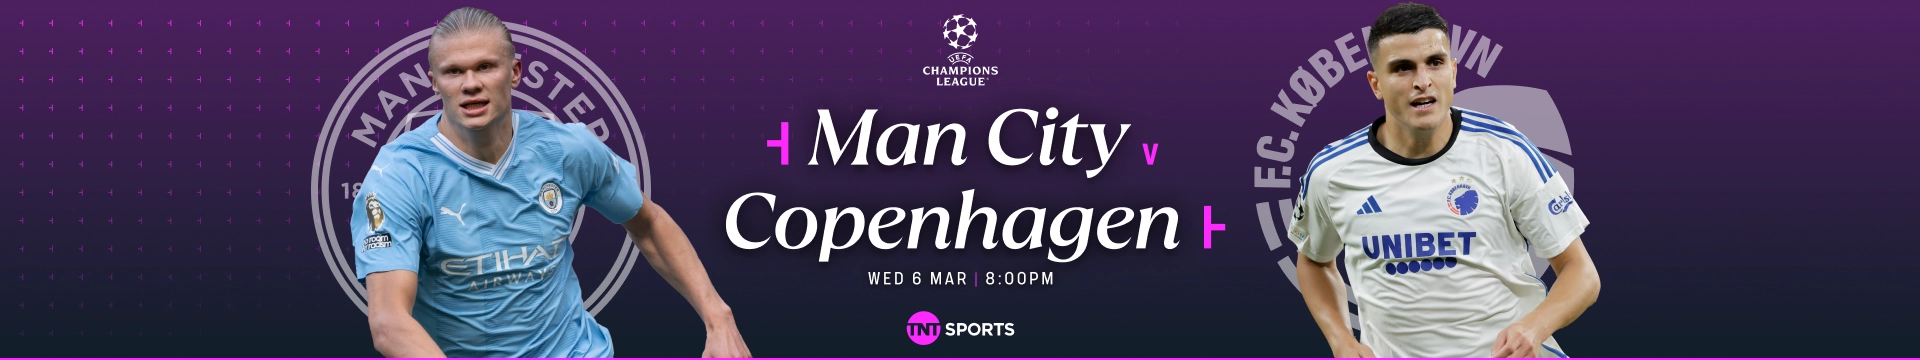 Man City v Copenhagen - Wednesday 6 March at 8pm on TNT Sports